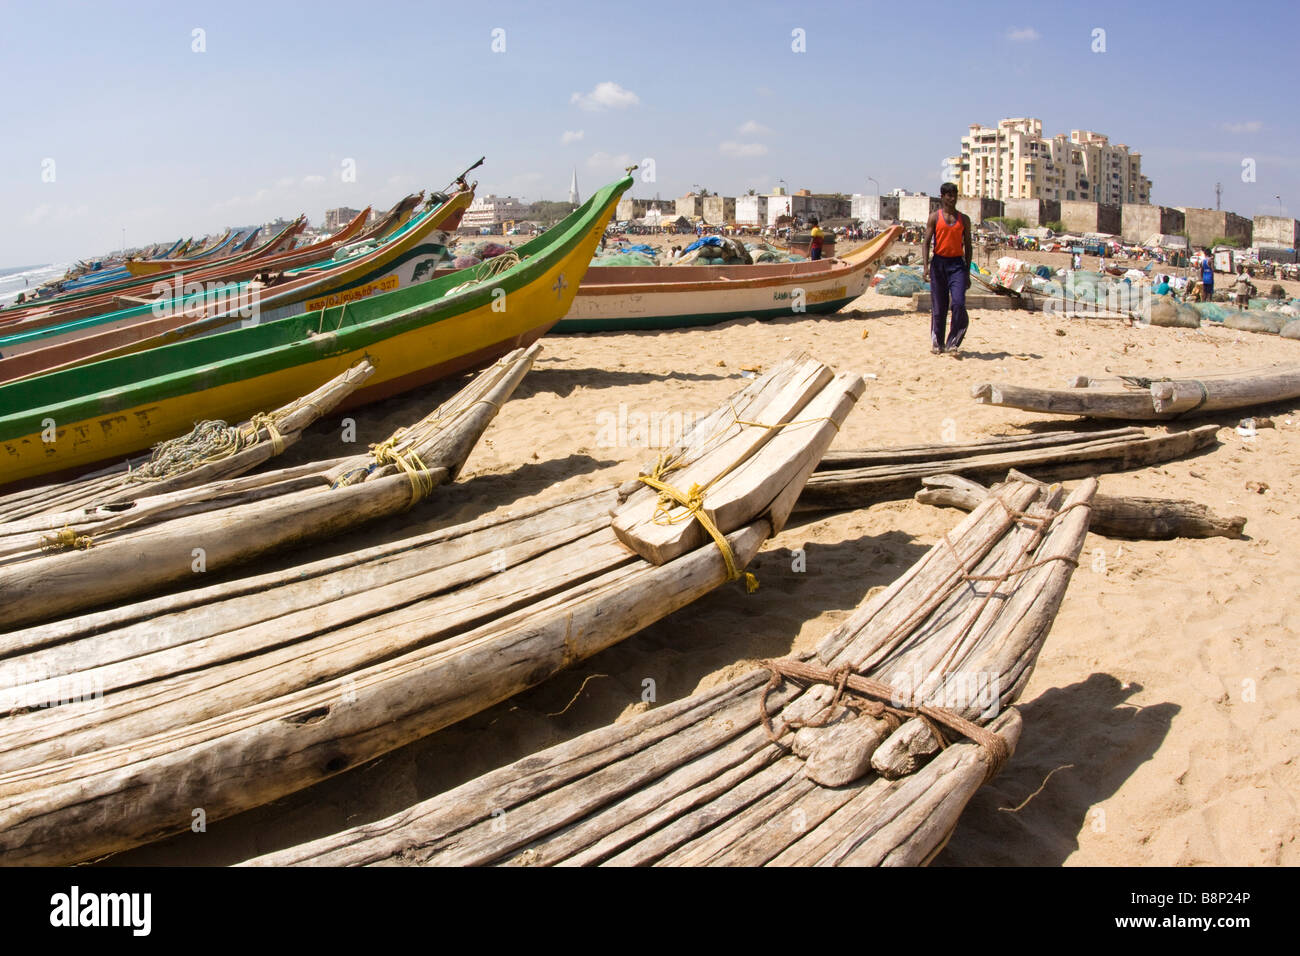 India Tamil Nadu Chennai beach traditional log and tsunami relief fibreglass fishing boats on shore Stock Photo